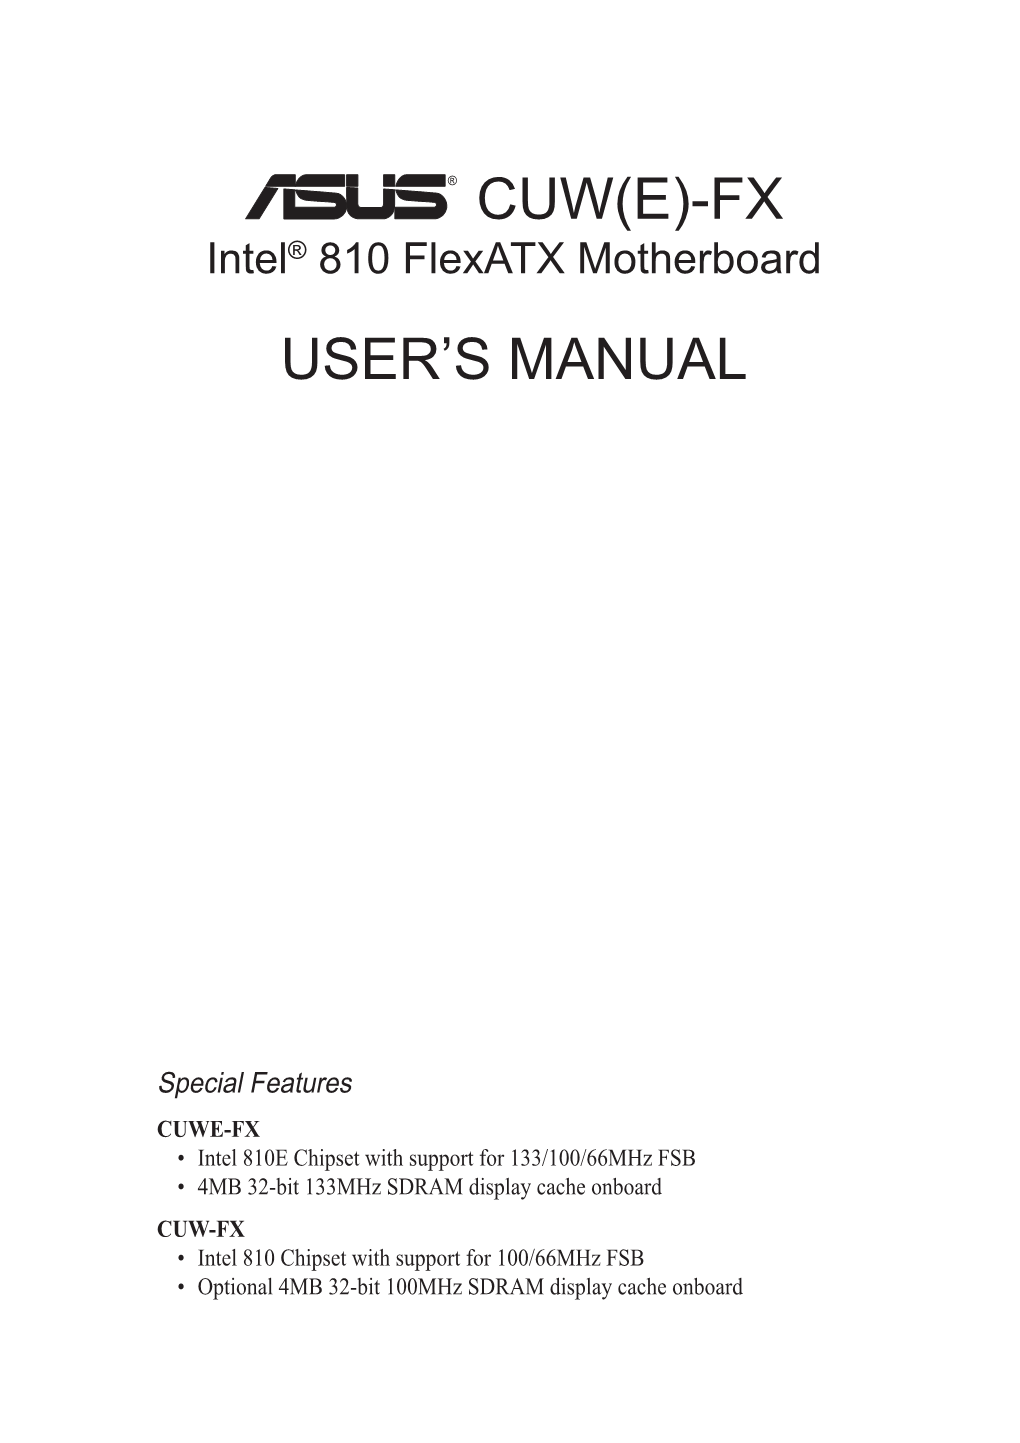 Cuw(E)-Fx User's Manual